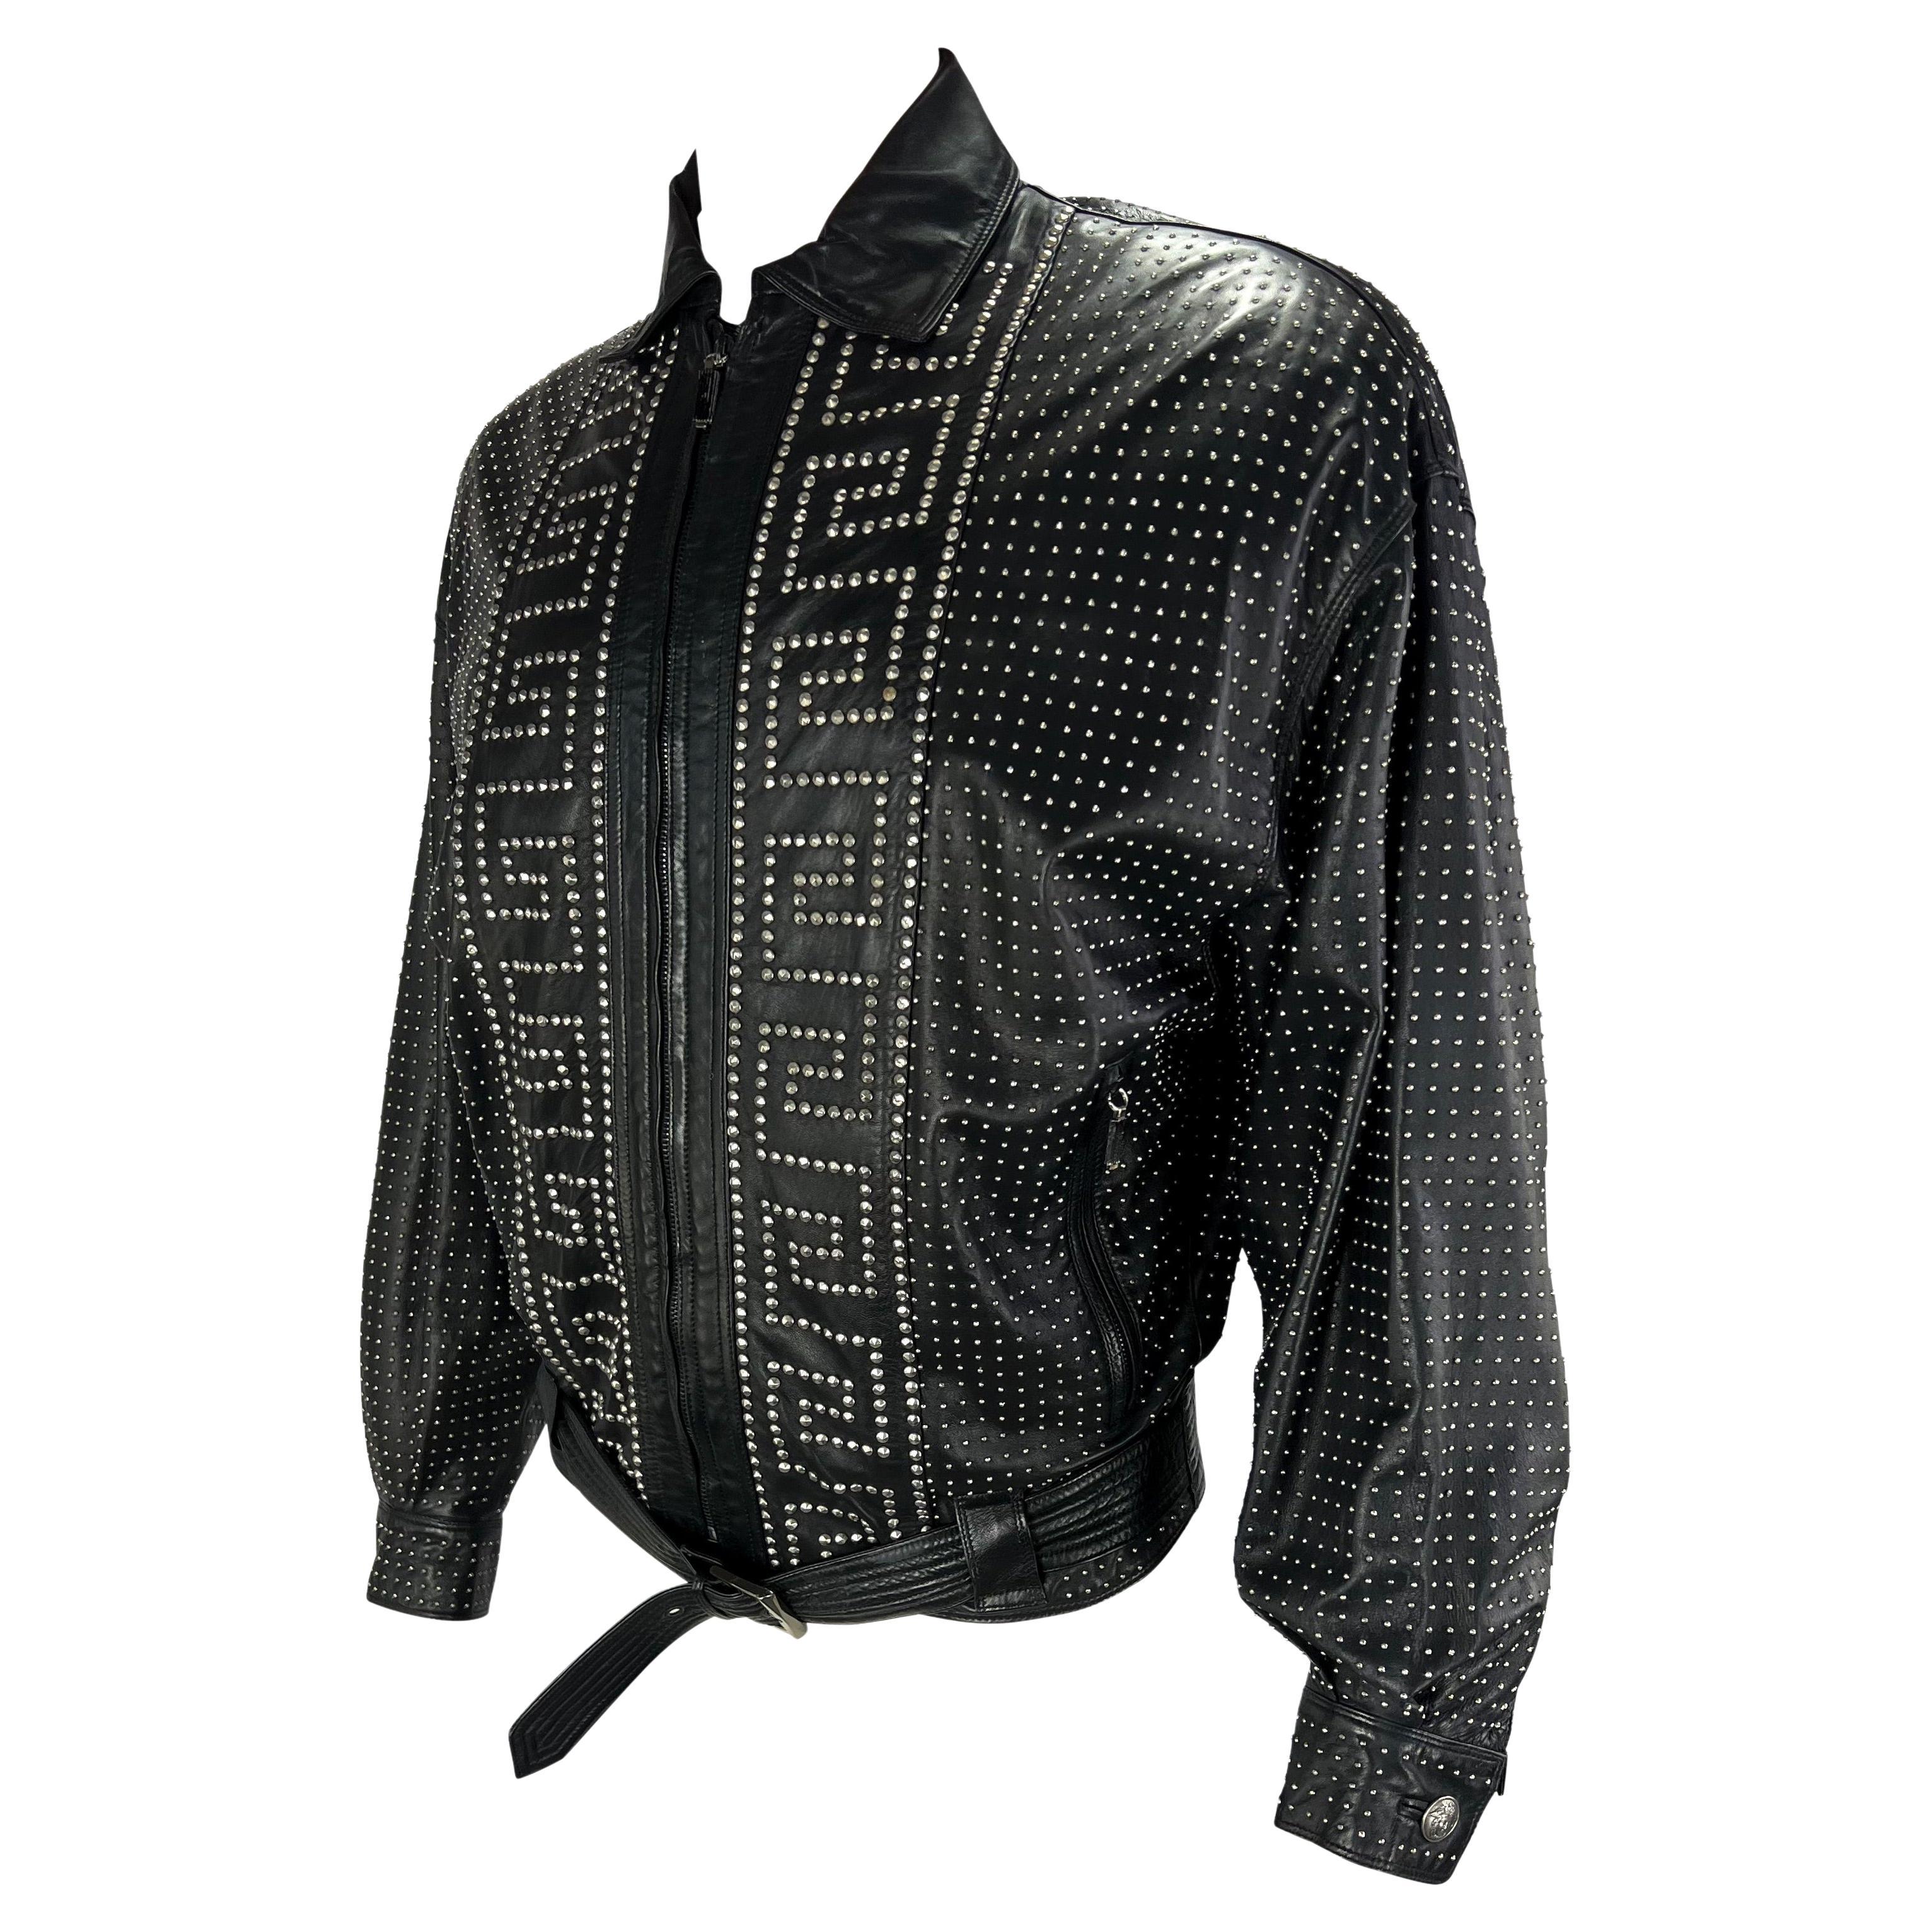 Black S/S 1992 Gianni Versace Men's Runway Studded Leather Greek Key Moto Jacket